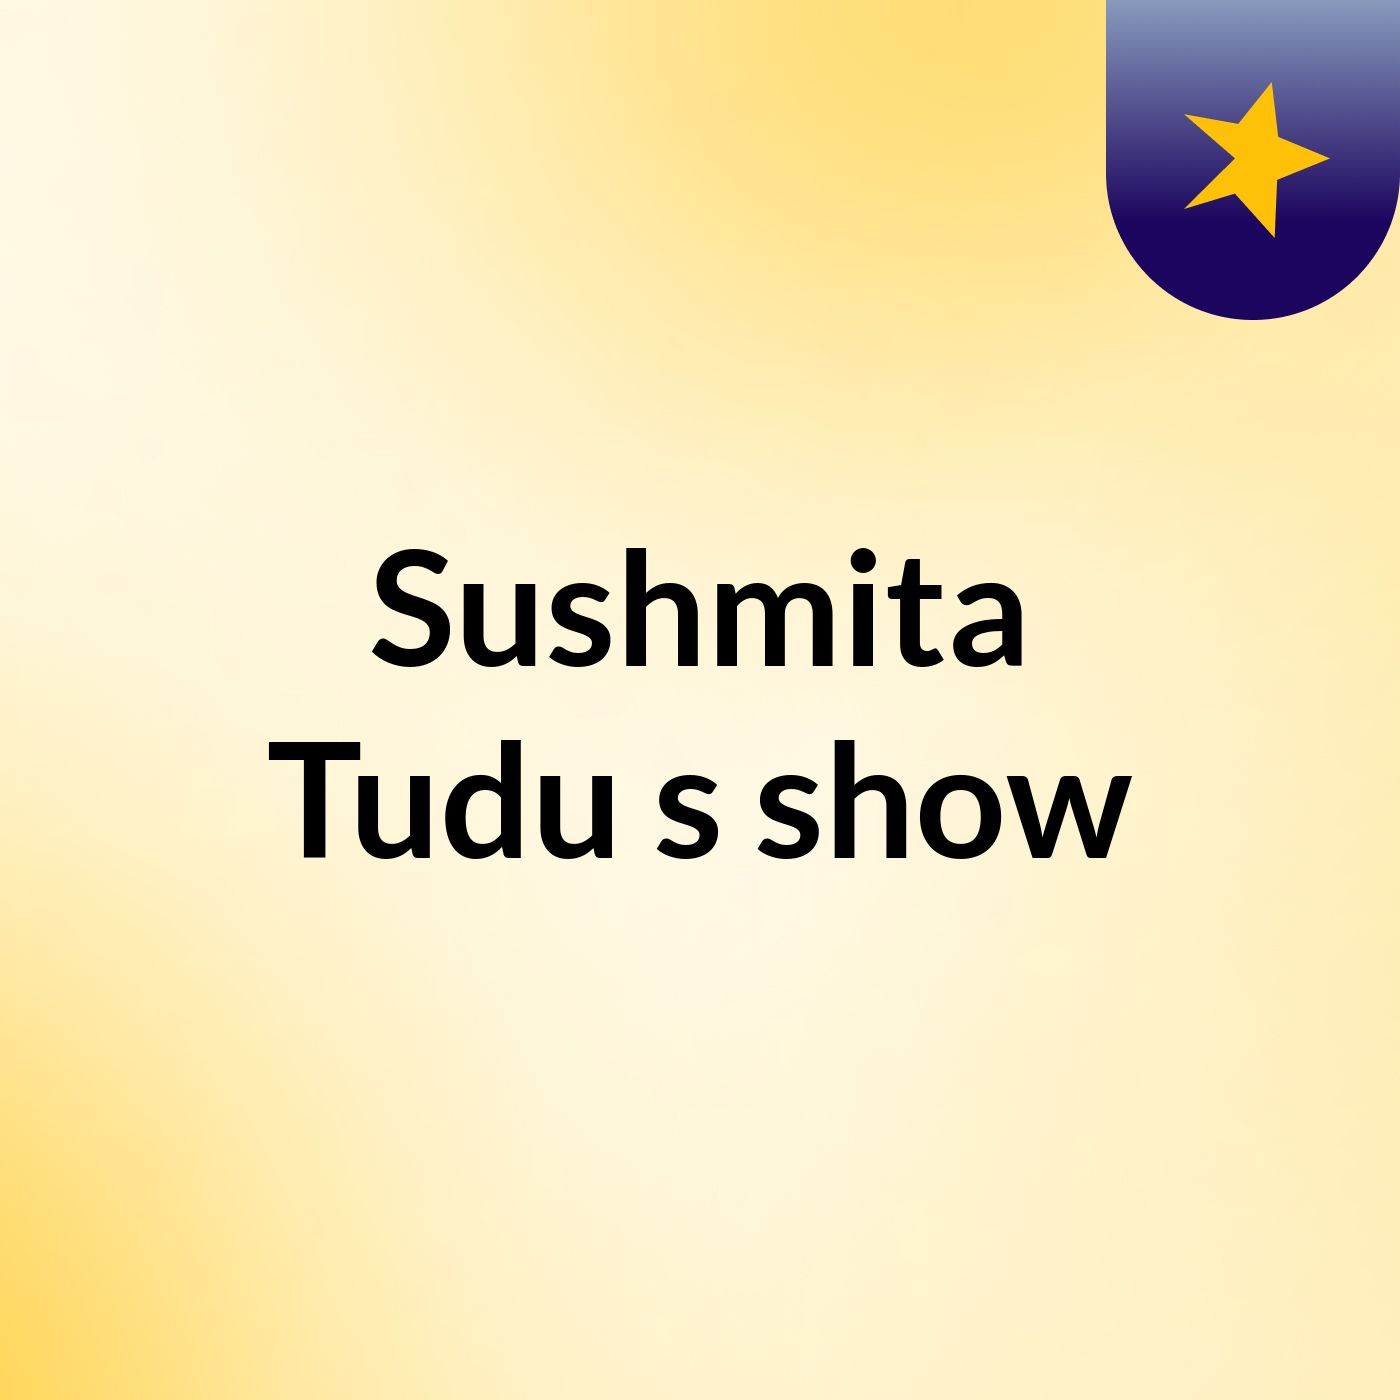 Sushmita Tudu's show